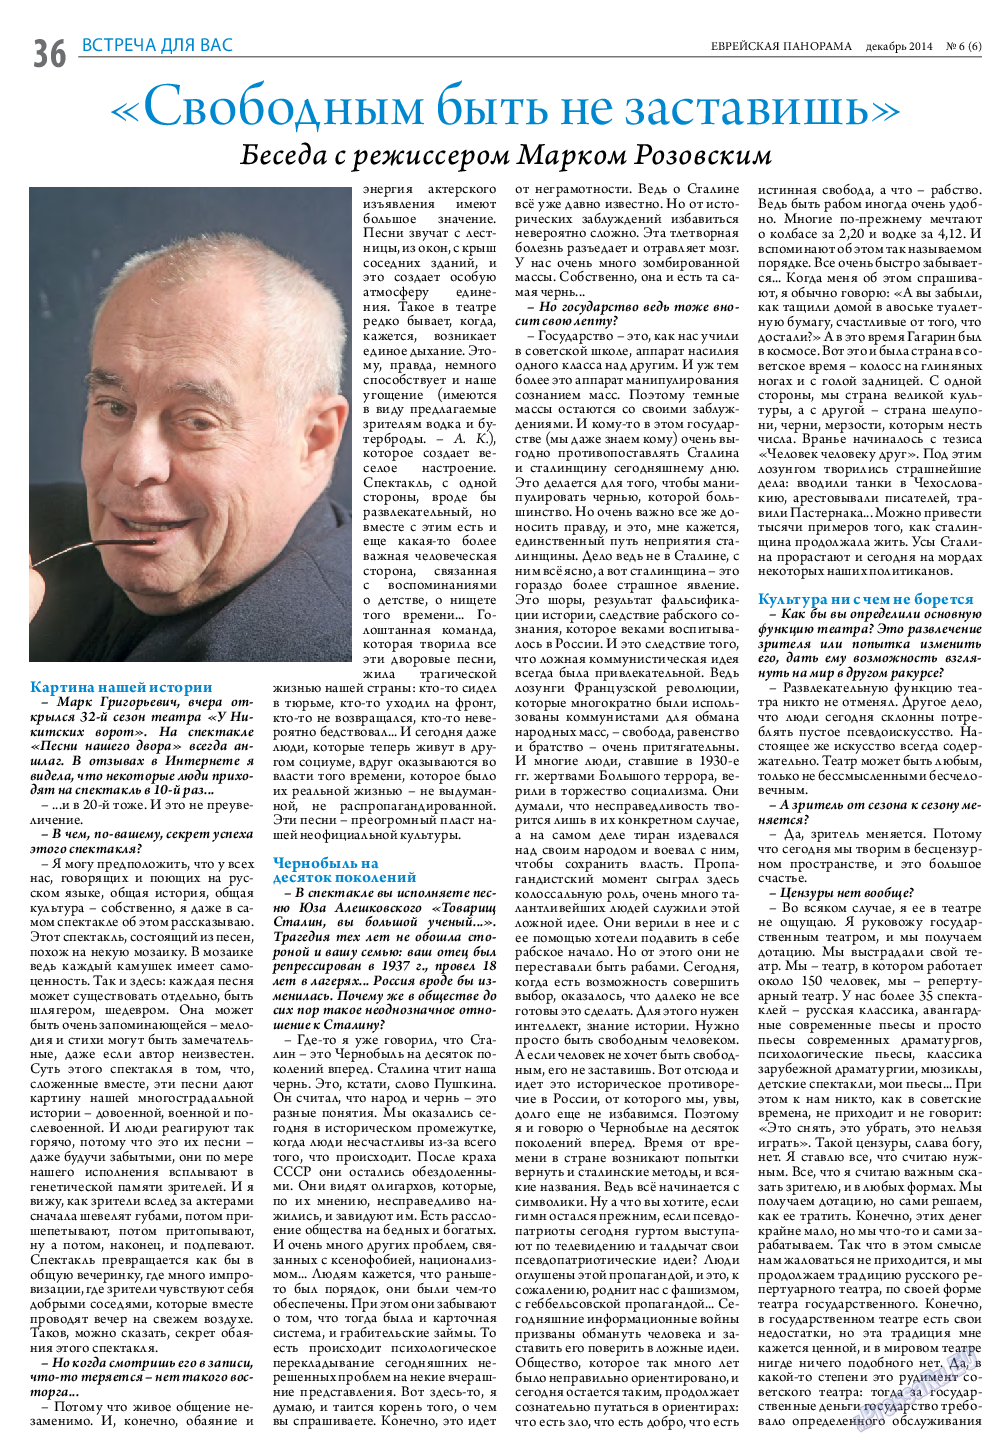 Еврейская панорама, газета. 2014 №6 стр.36